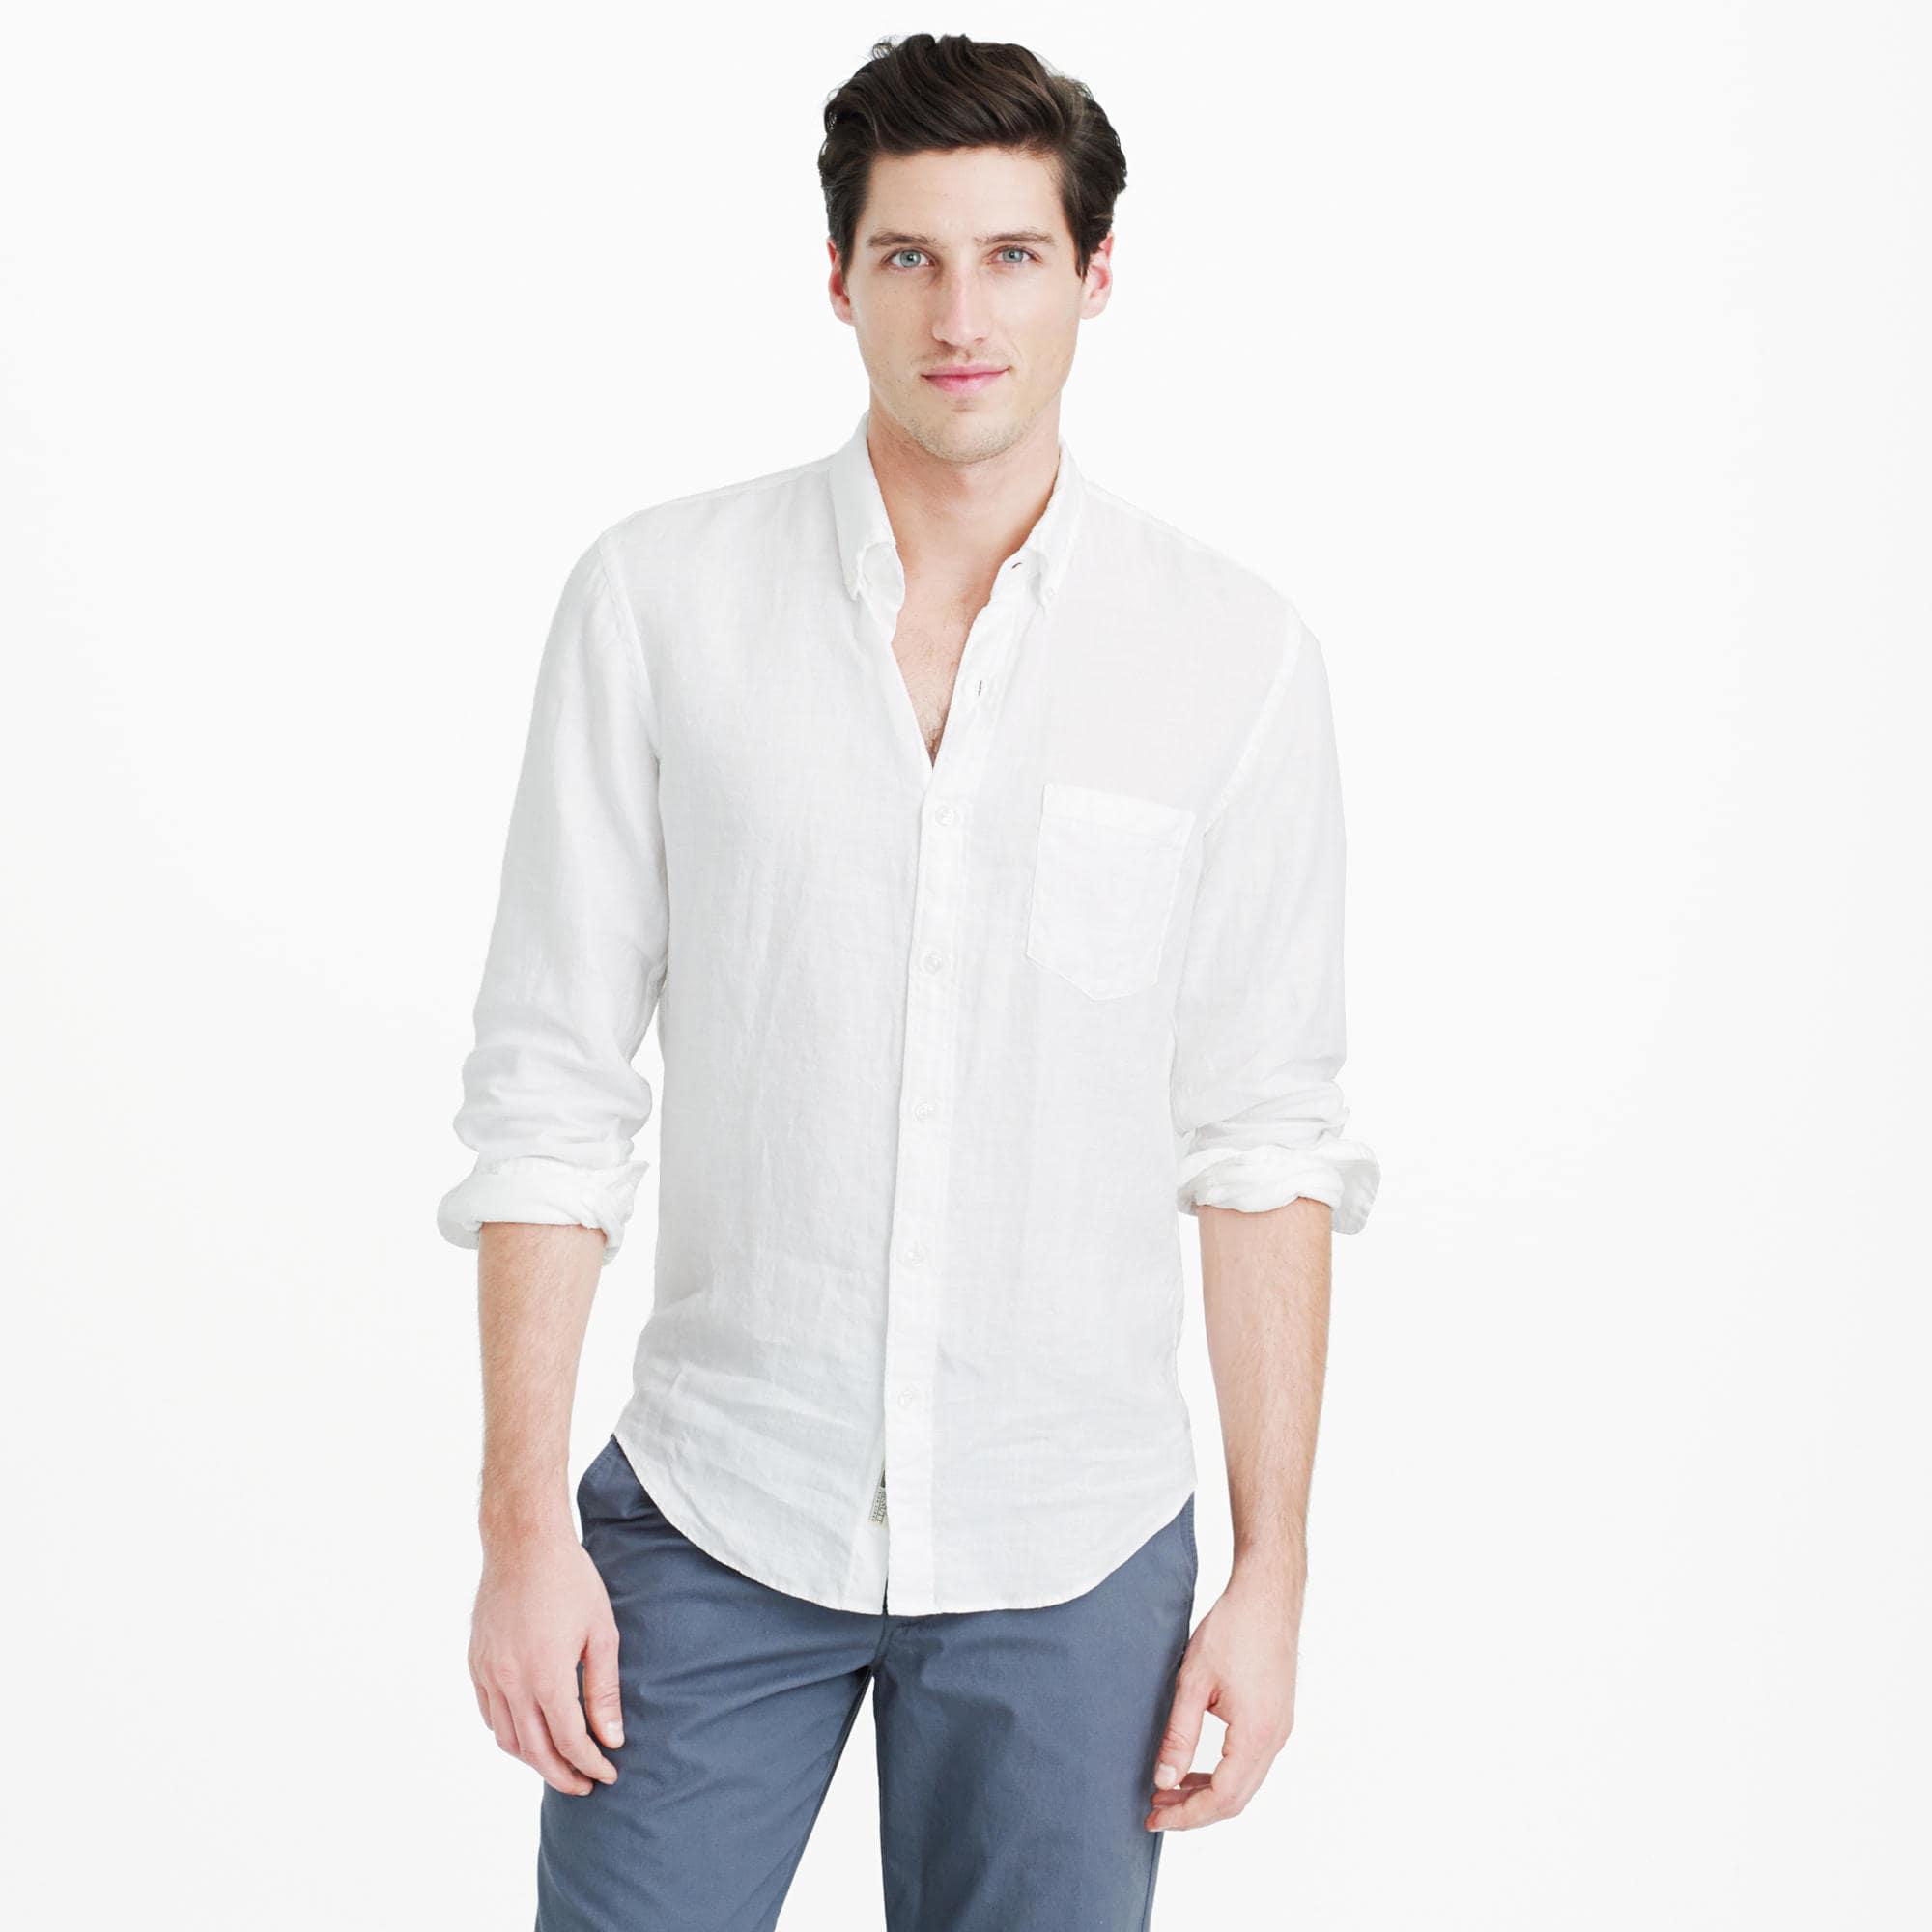 J.Crew Slim Irish Linen Shirt In Solid in White for Men - Lyst